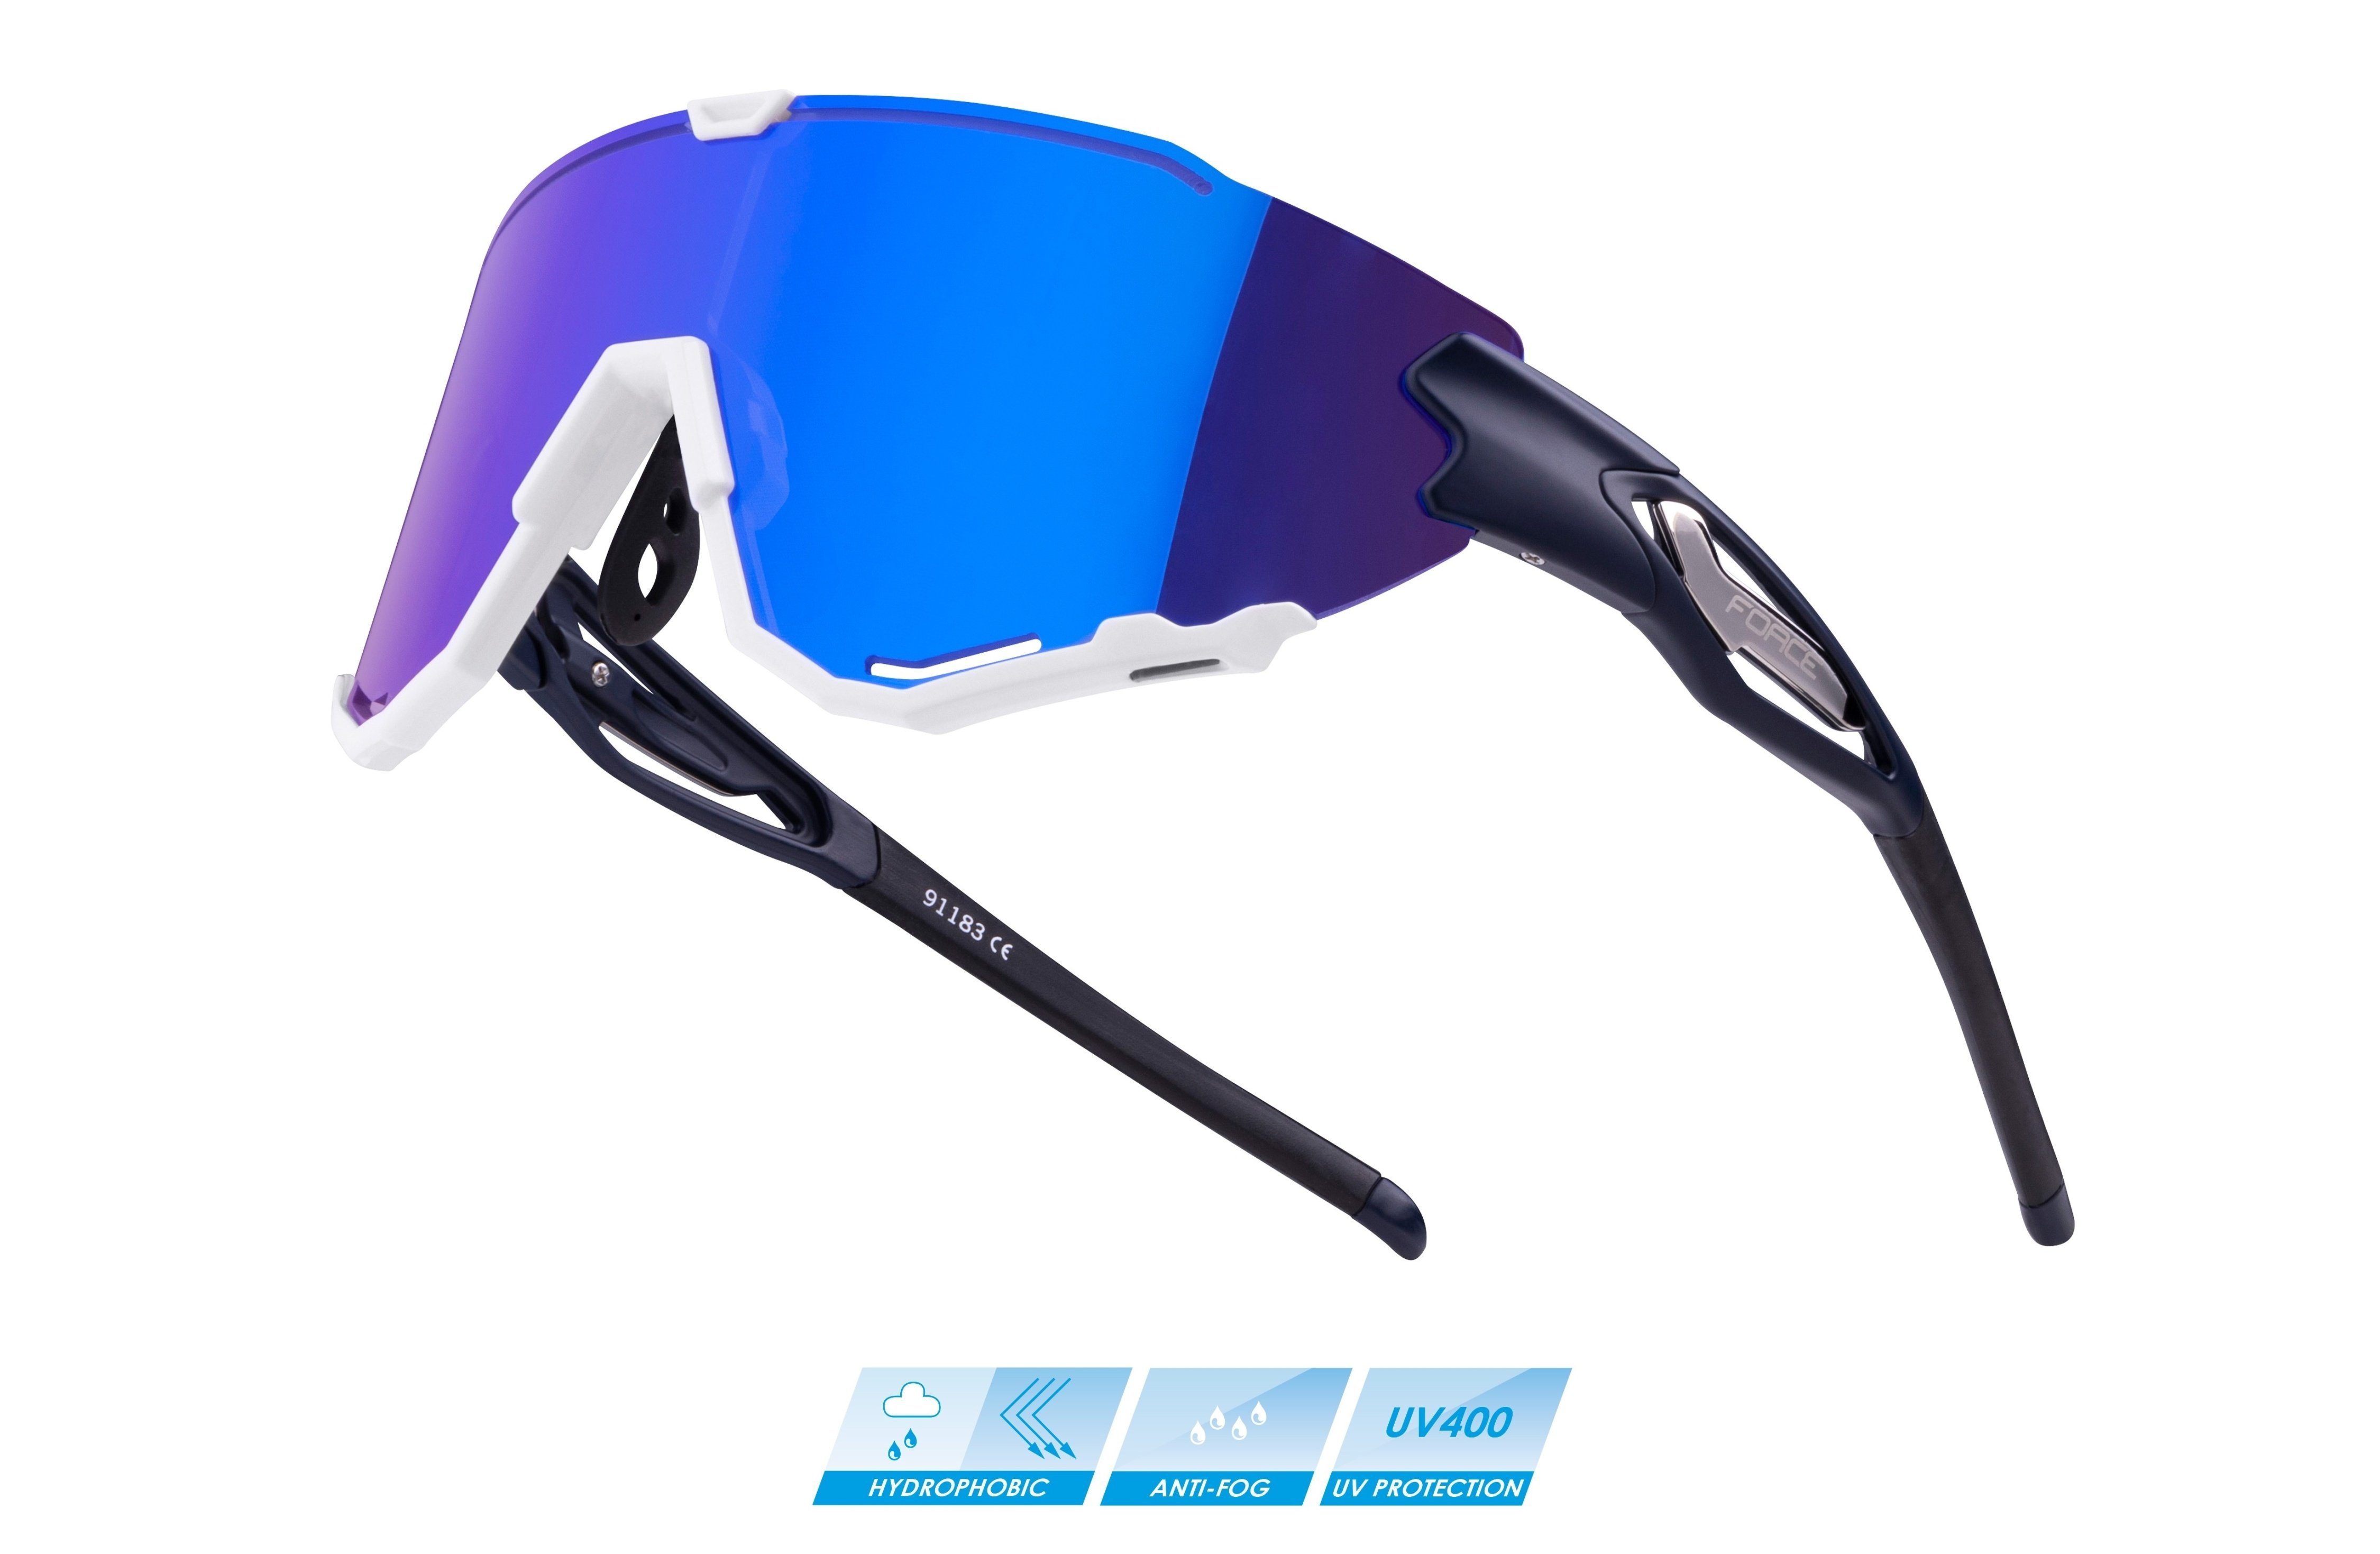 FORCE Fahrradbrille Sonnenbrille FORCE CREED blau Wechsellinse | Fahrradbrillen